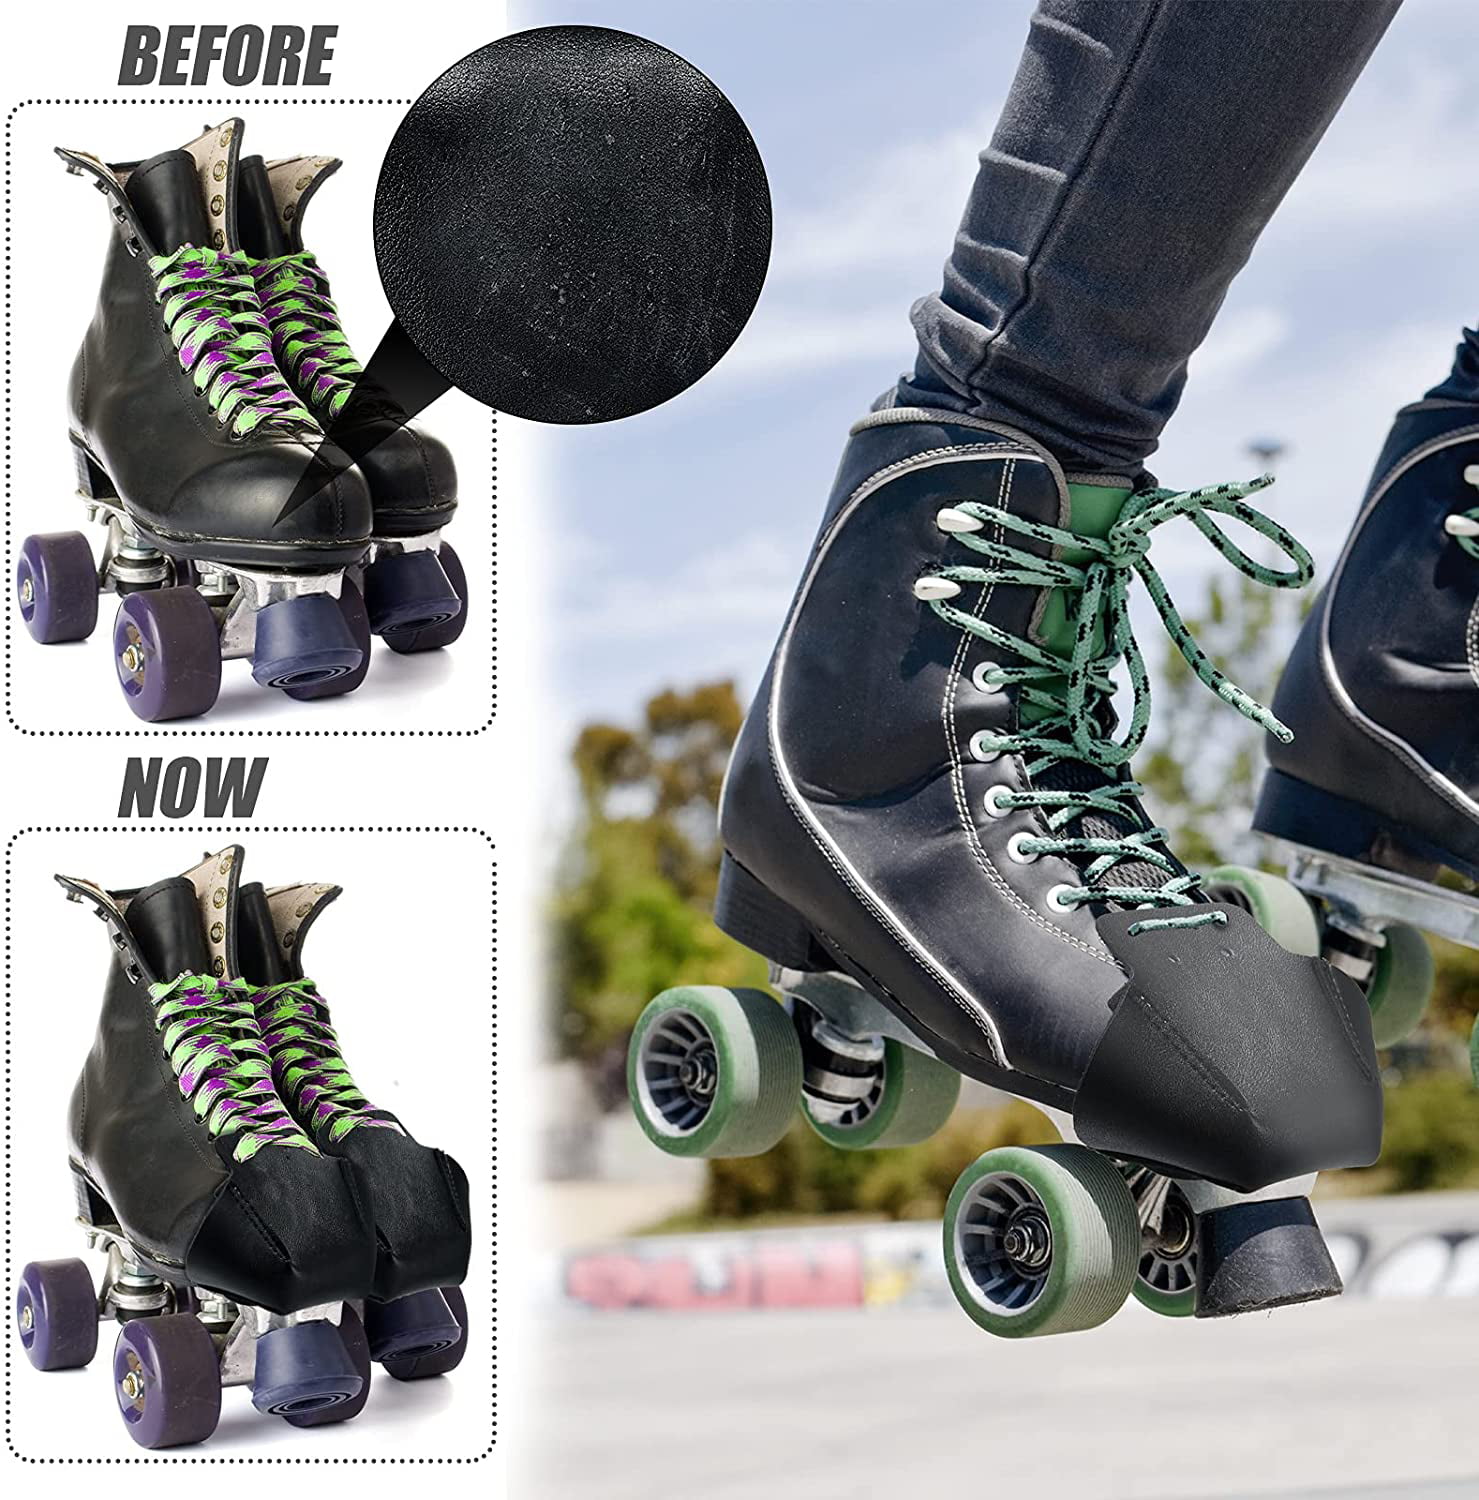 Artificial Roller Skates Leather Cap Protectors for Quad Roller Skate 1 Pair Roller Skate Toe Cap Guards Protectors